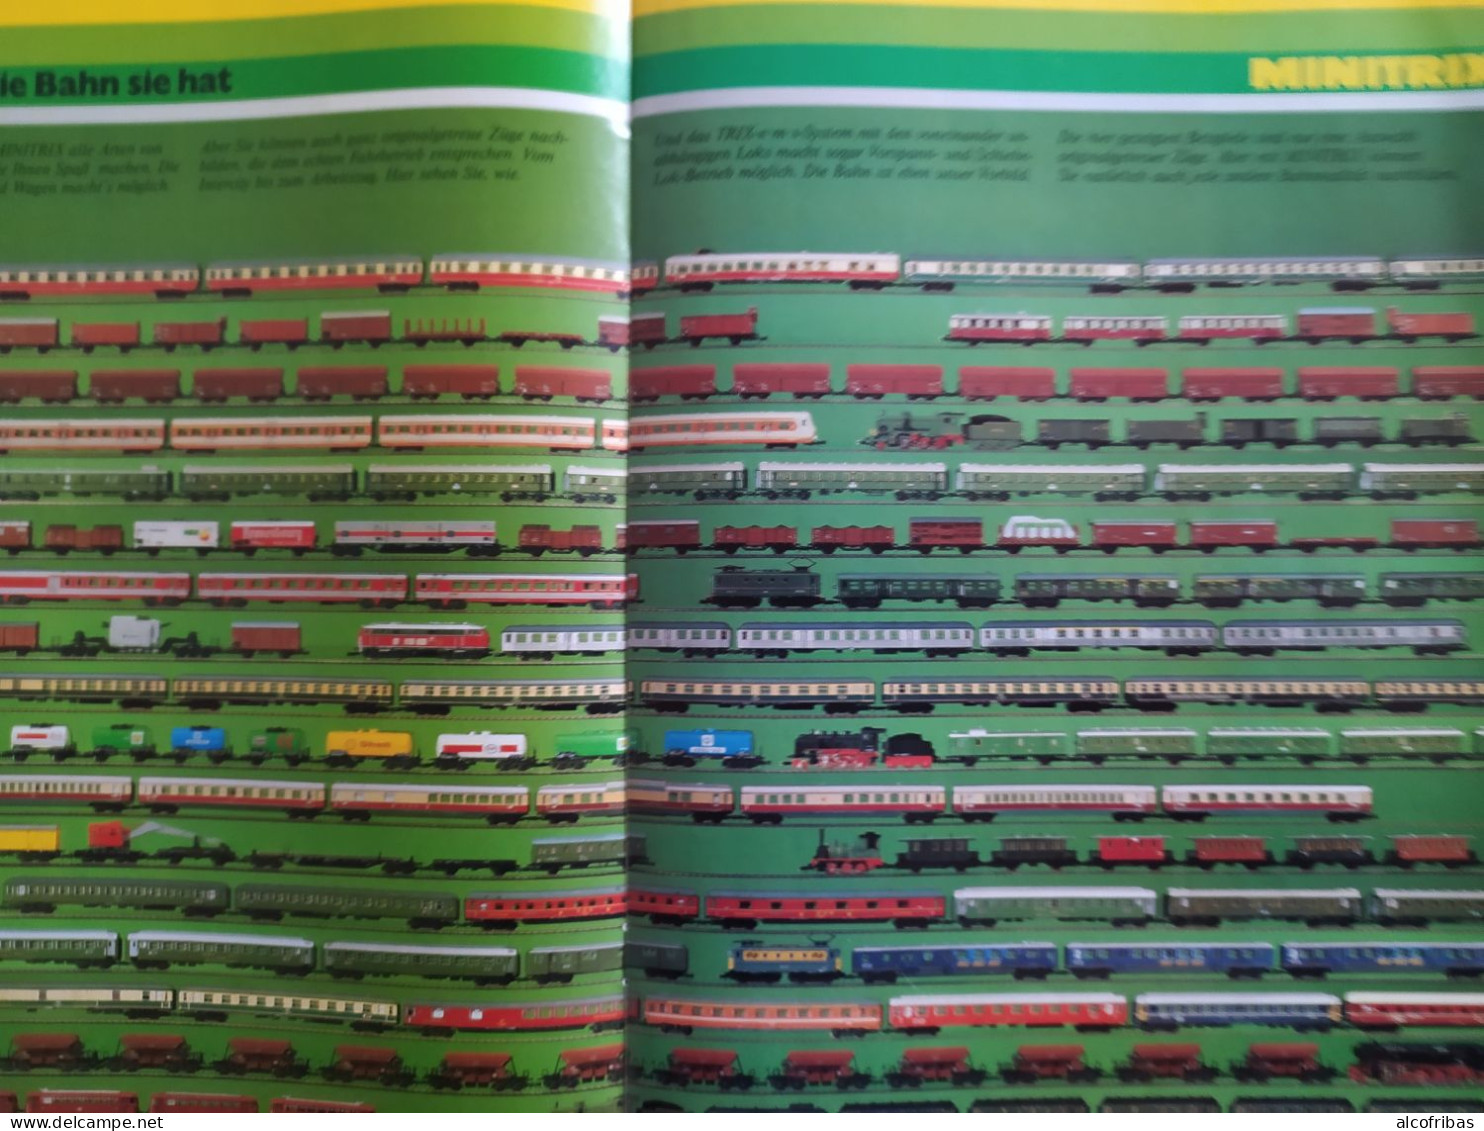 Train Chemin Fer Rail Locomotive Wagon Bahnspass Zug Gleise Catalogue Katalog Minitrix 1982 - 1983 + Supplement - Allemagne